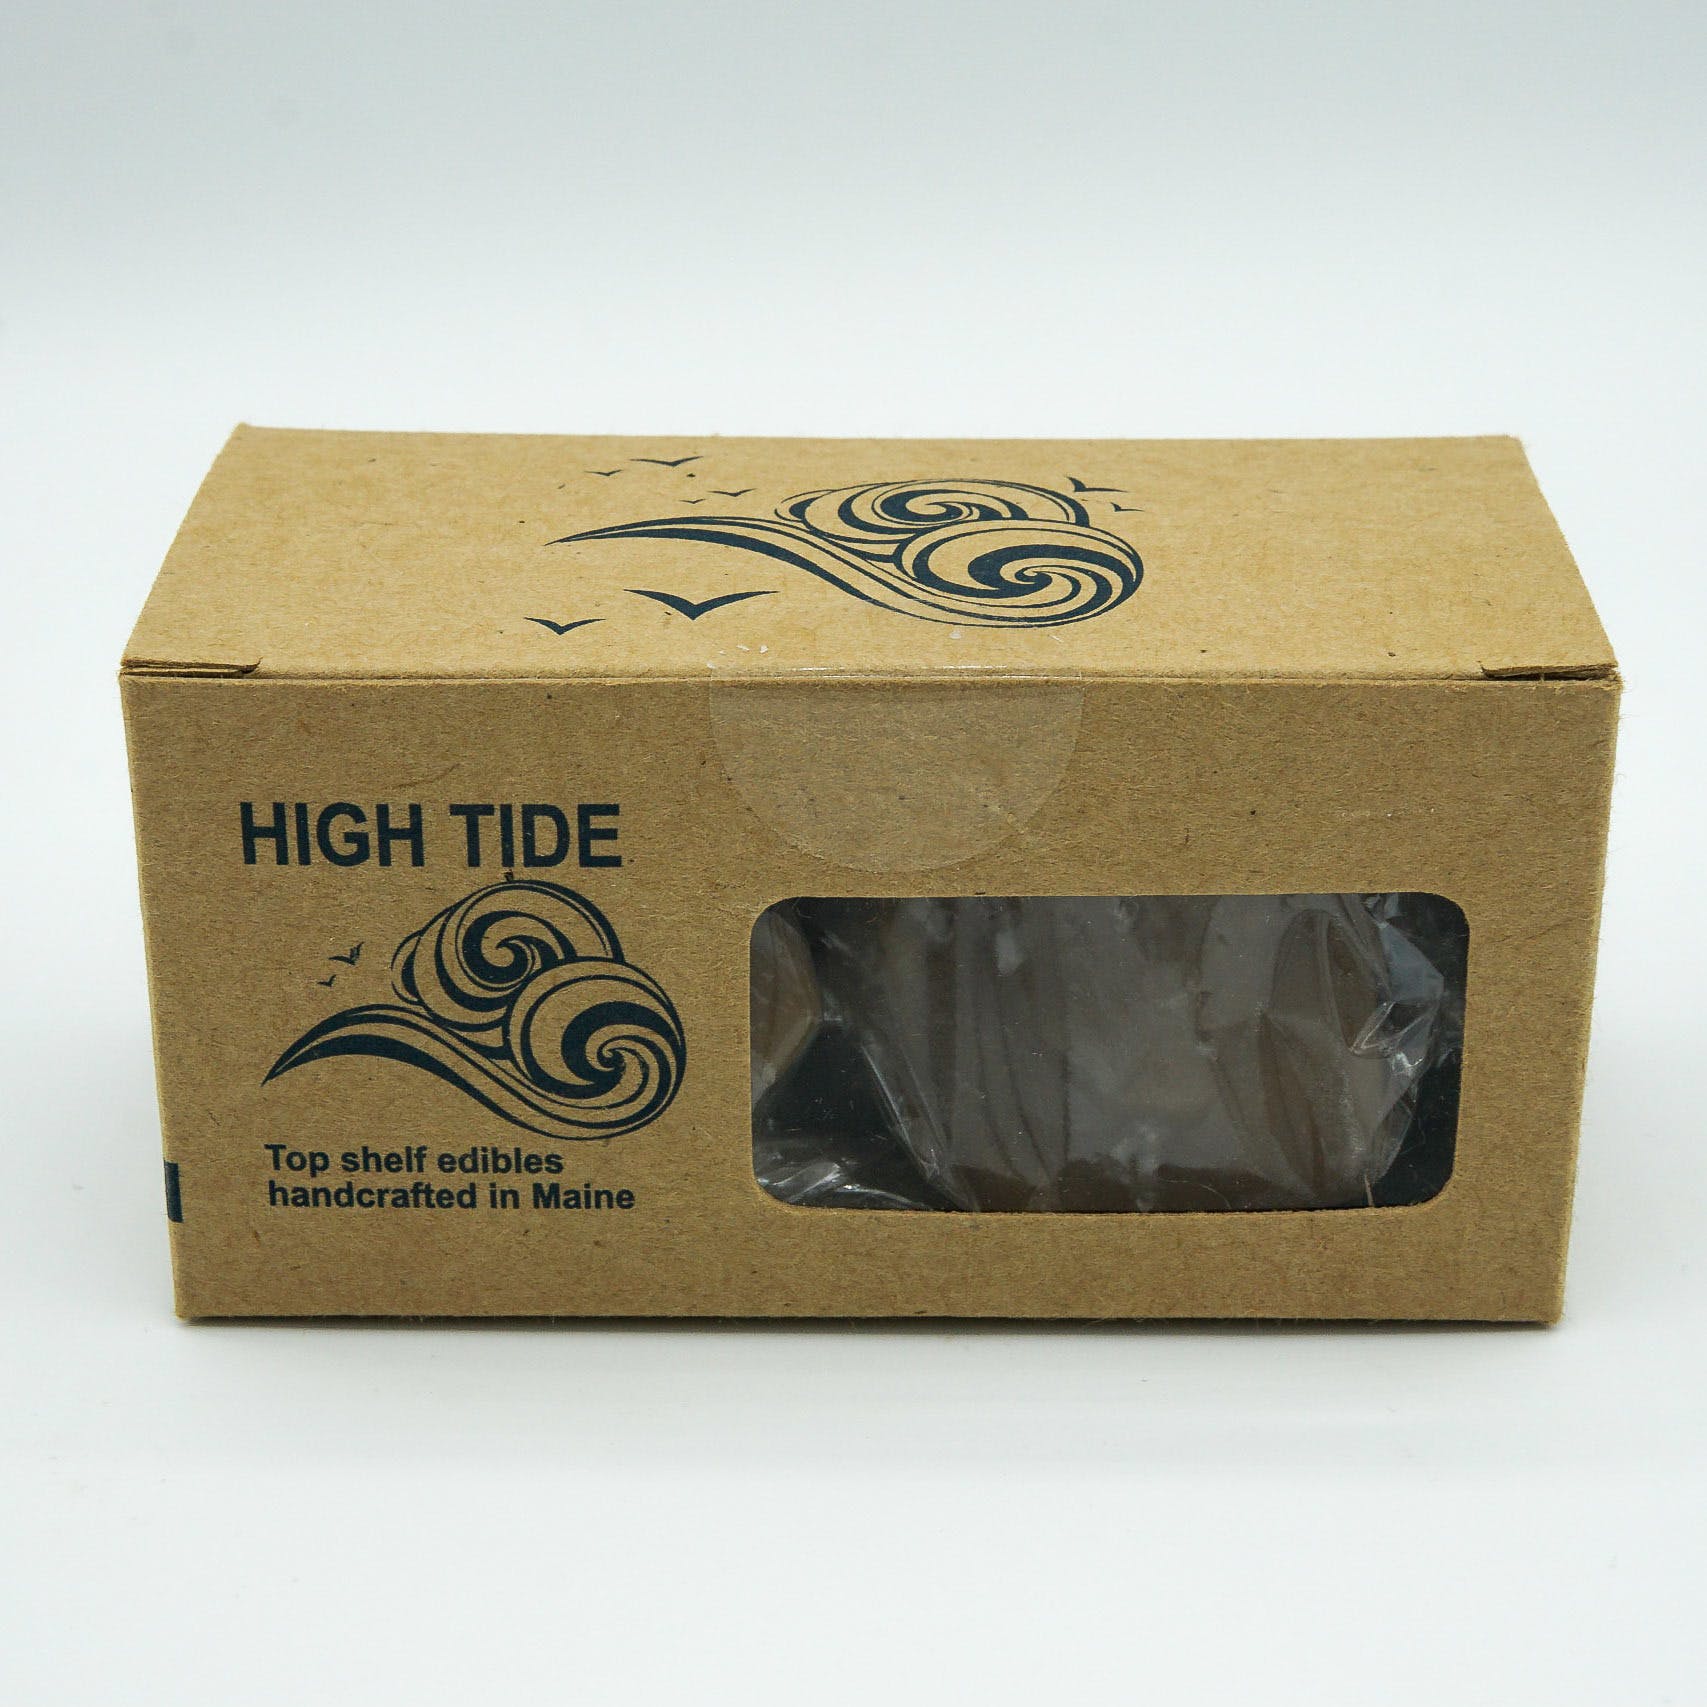 High Tide Salted Caramel Box of 4, 25mg each 100mg total